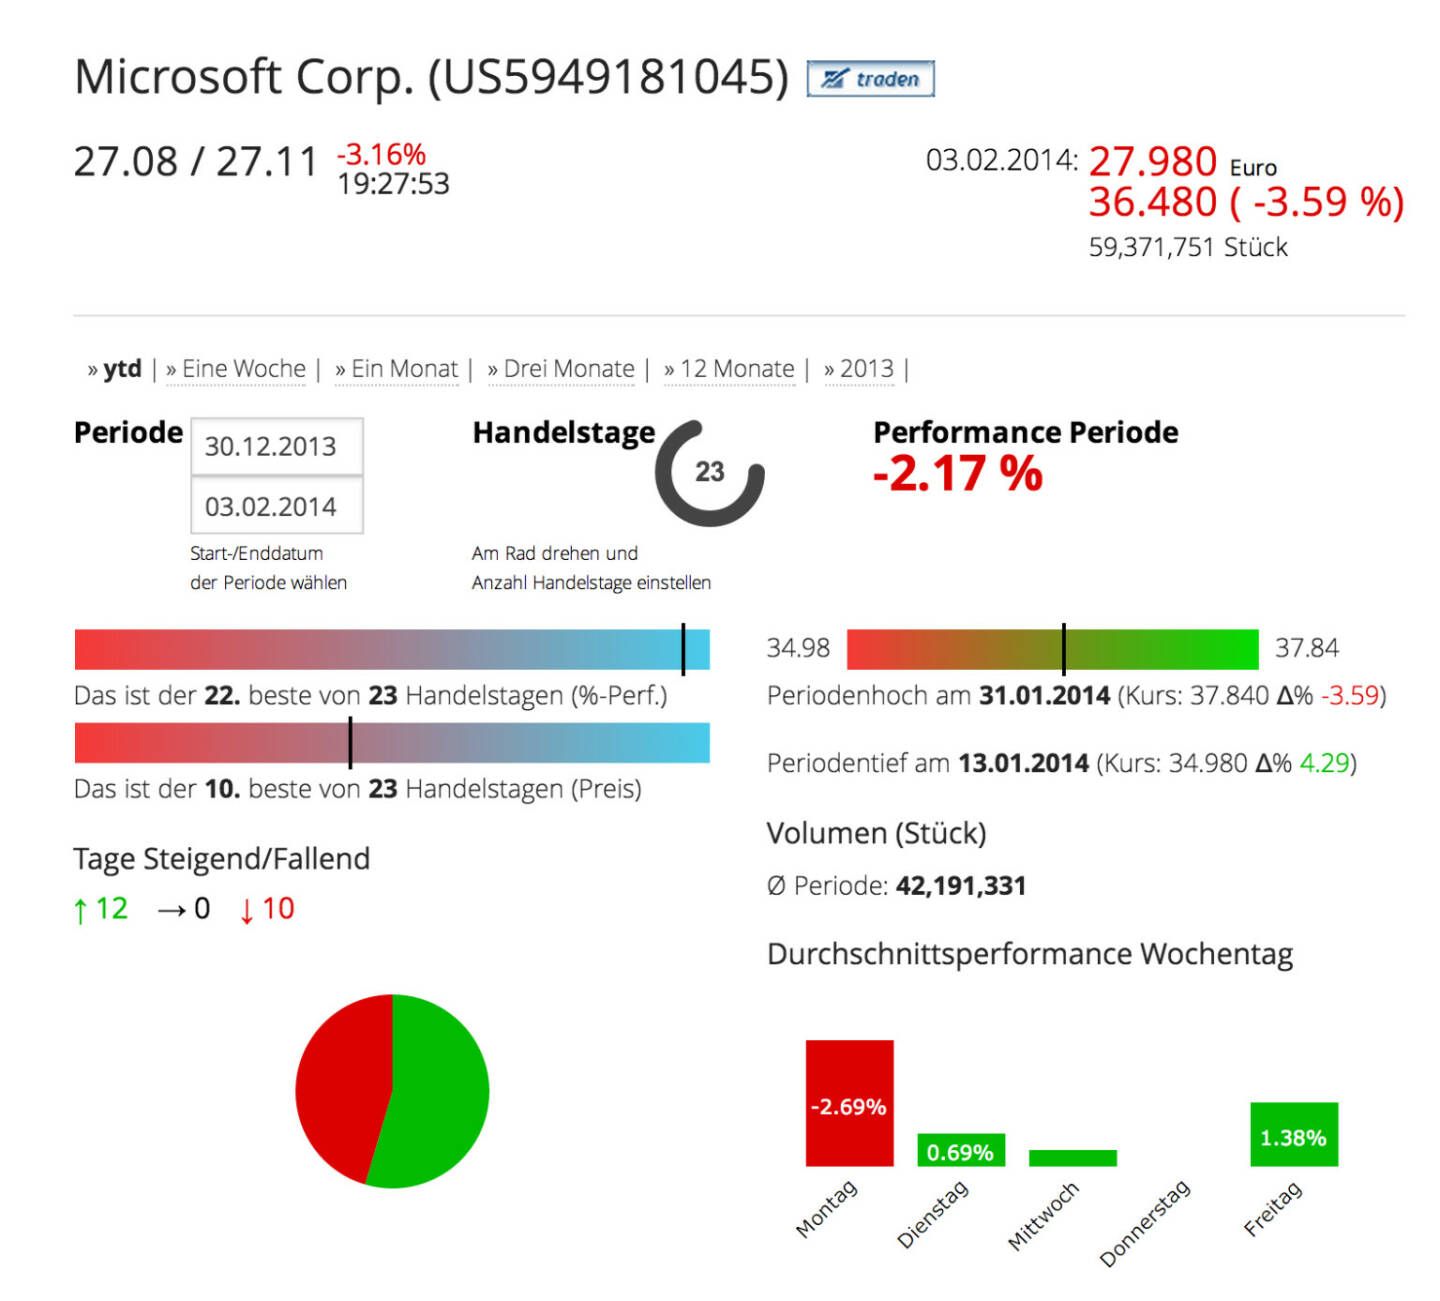 Die Microsoft Corp. im Börse Social Network, http://boerse-social.com/launch/aktie/microsoft_corp